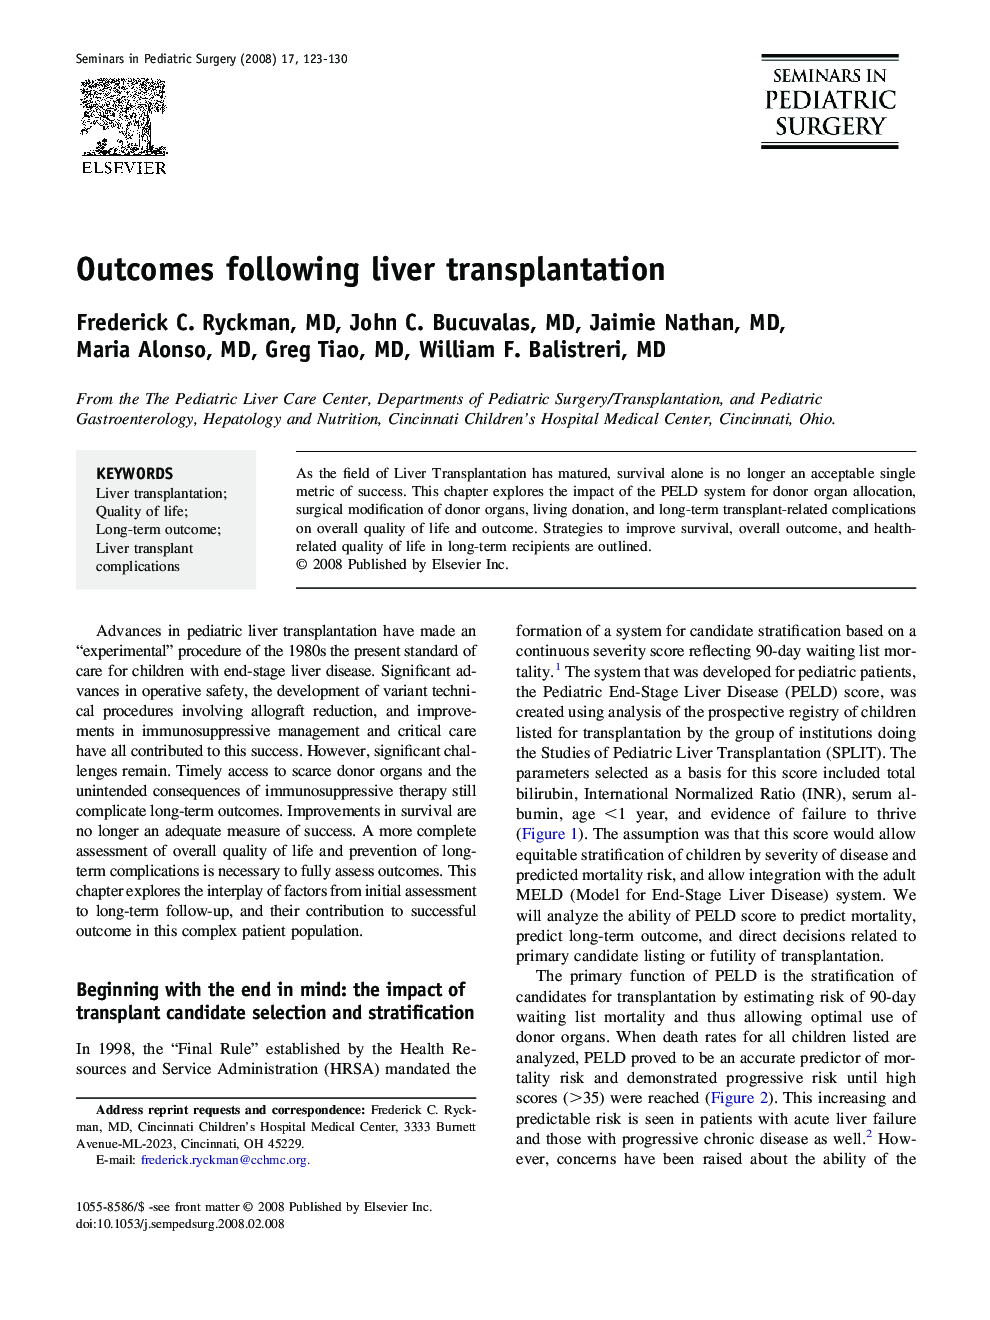 Outcomes following liver transplantation